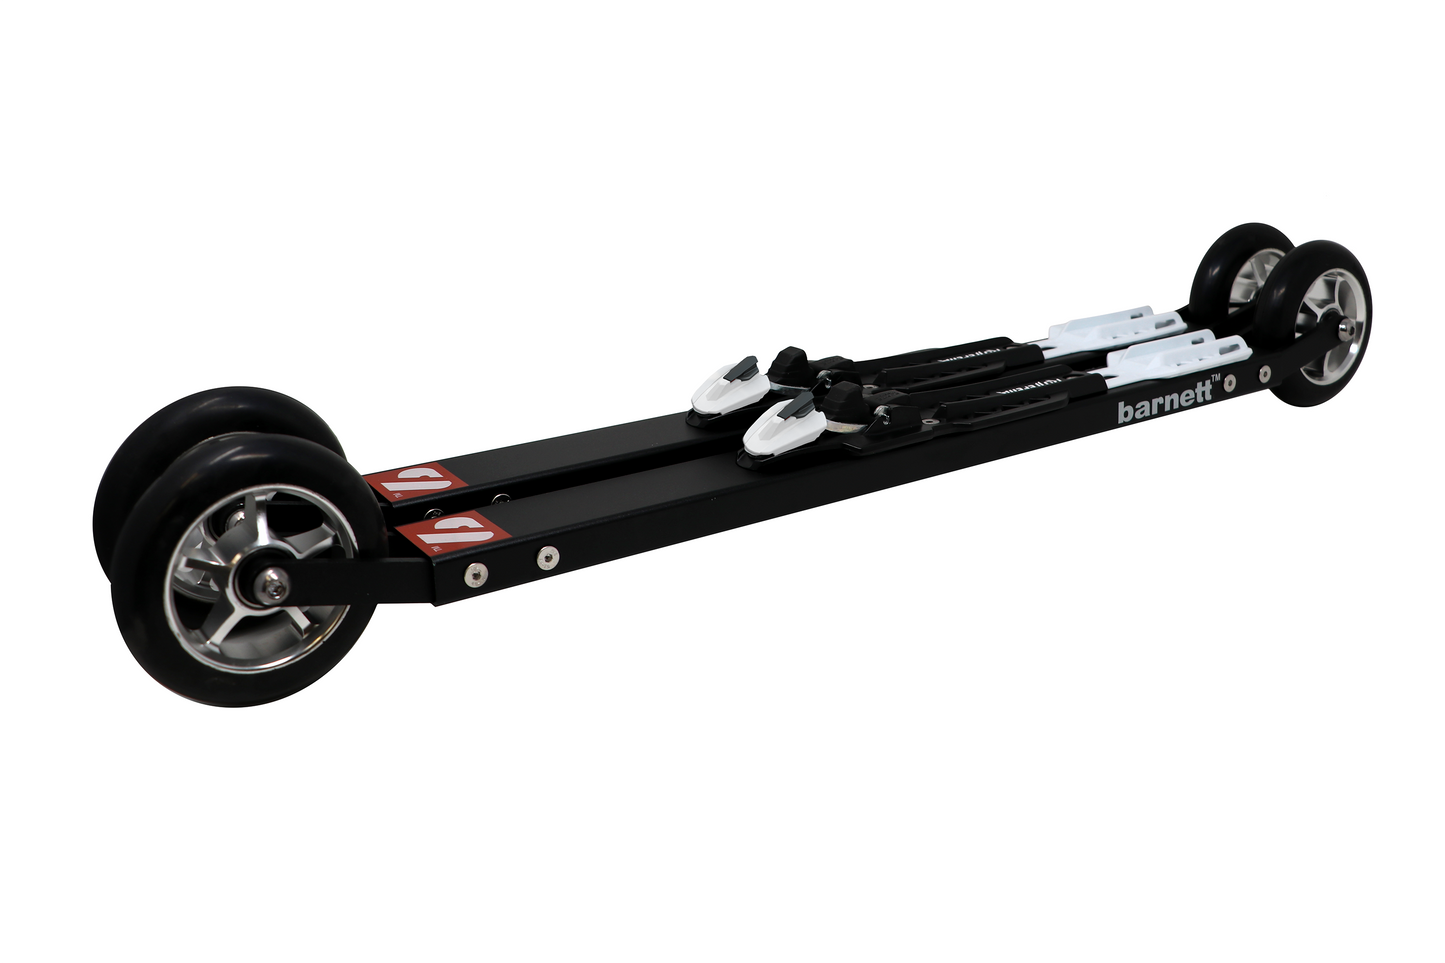 RSE-630 Binding NNN Roller ski, BLACK